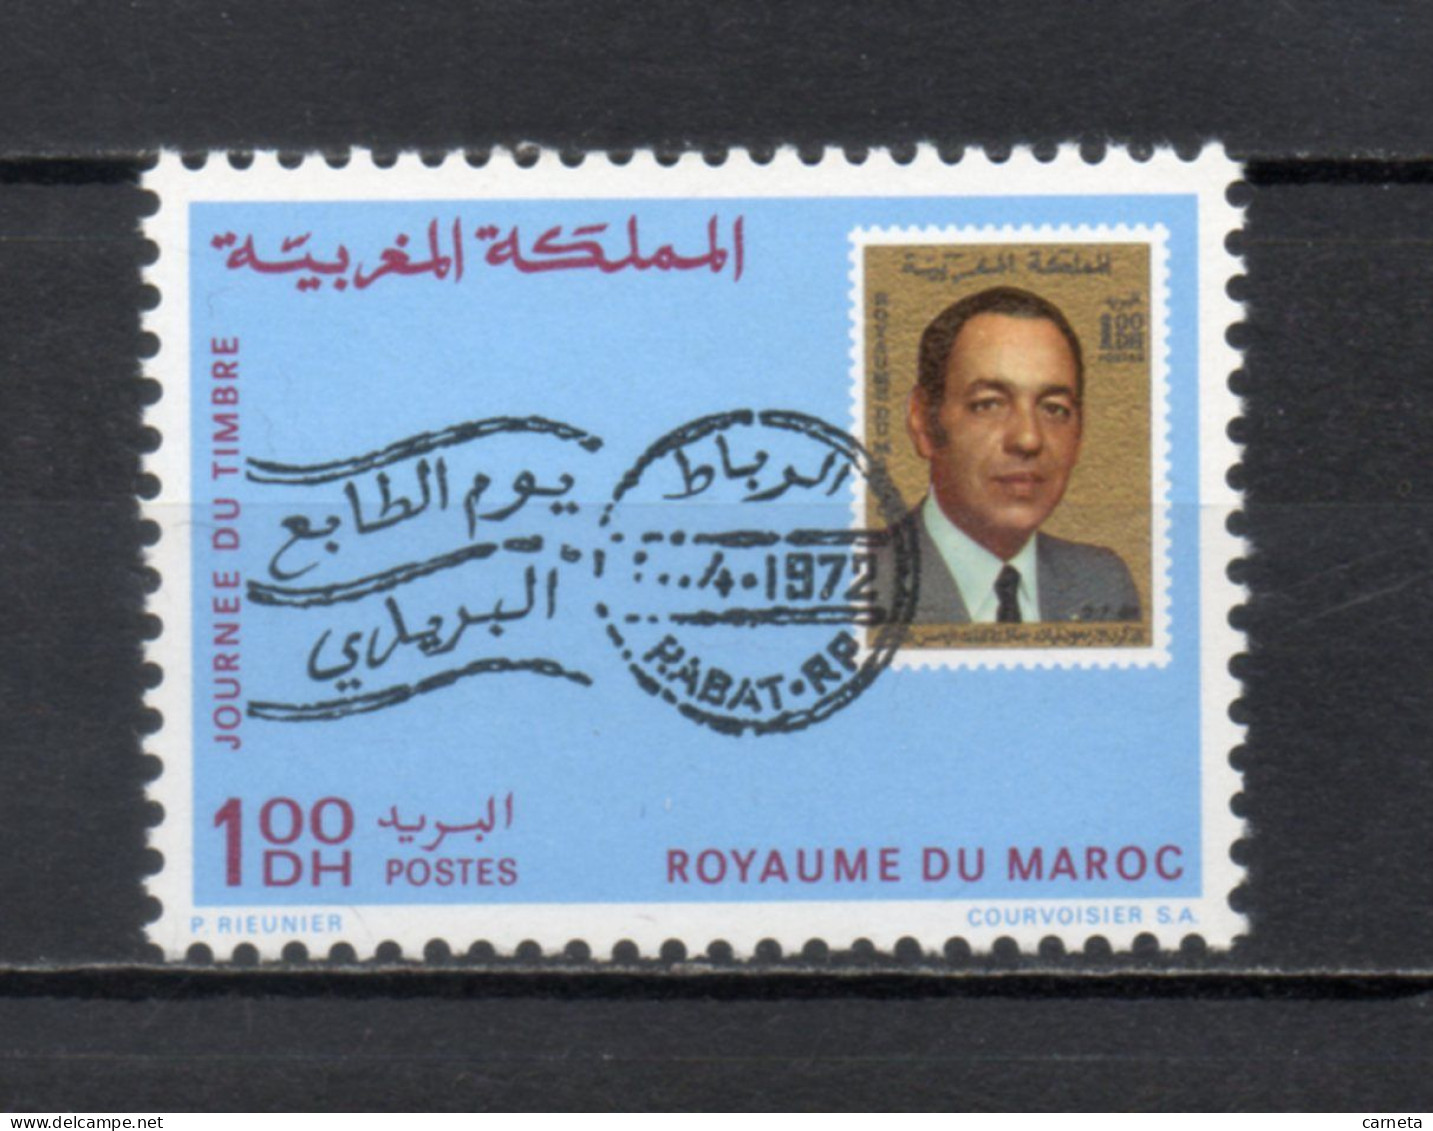 MAROC N°  636   NEUF SANS CHARNIERE  COTE  0.80€   ROI  JOURNEE DU TIMBRE - Morocco (1956-...)